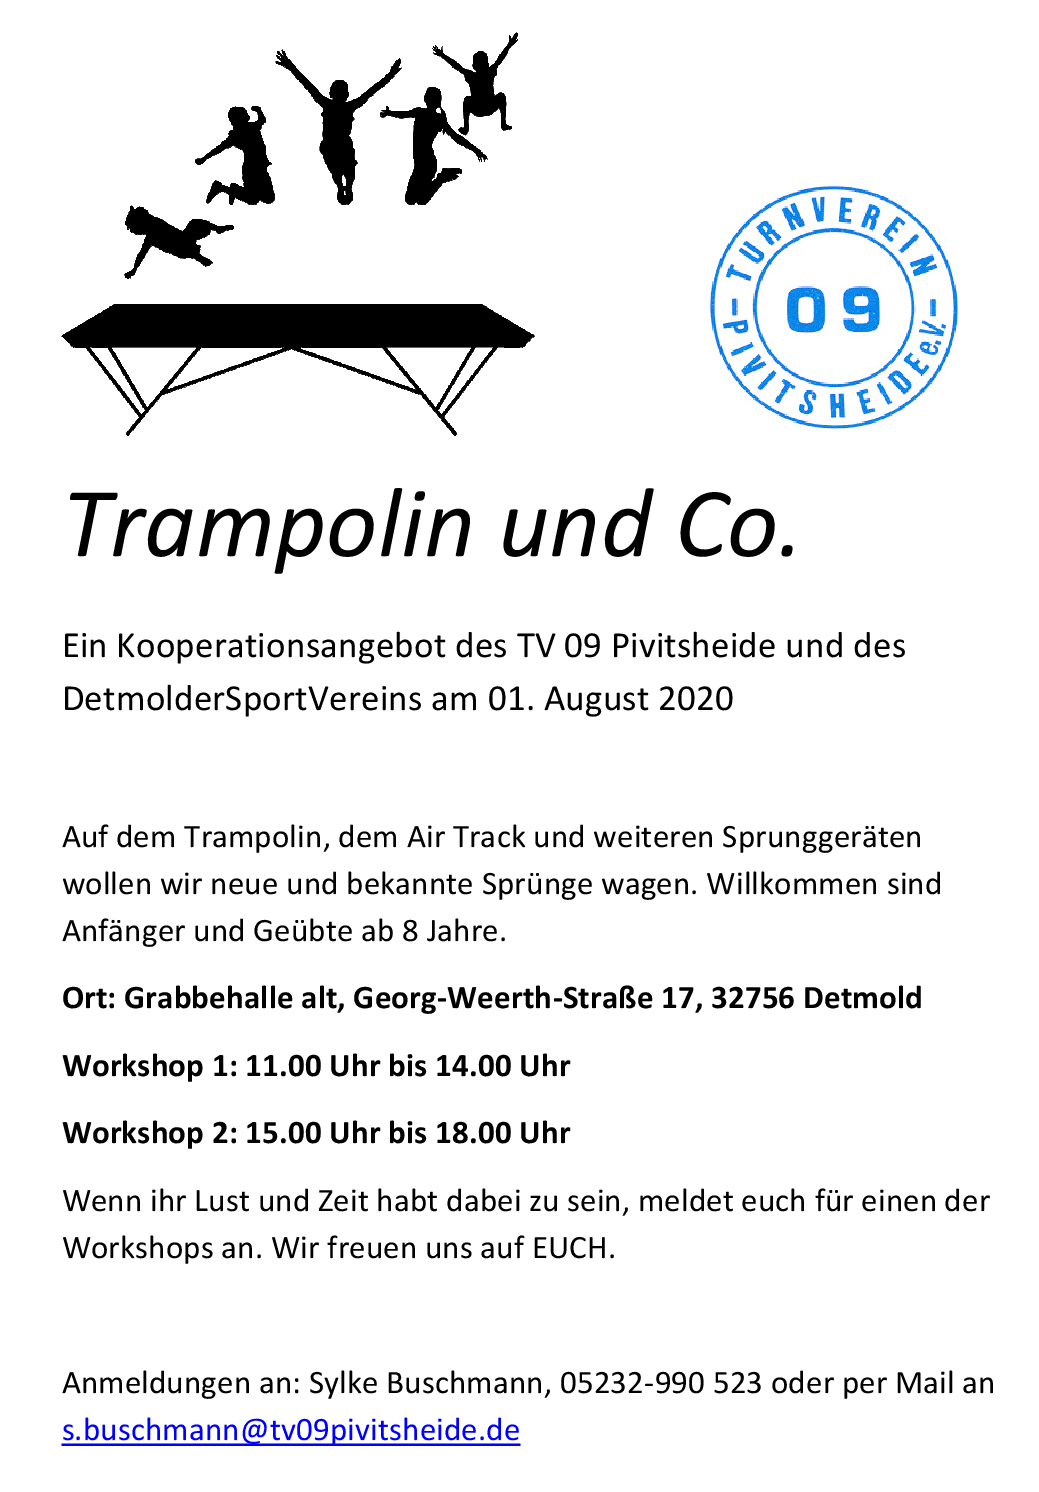 Trampolin und Co. Trampolinevent am 01.08.2020